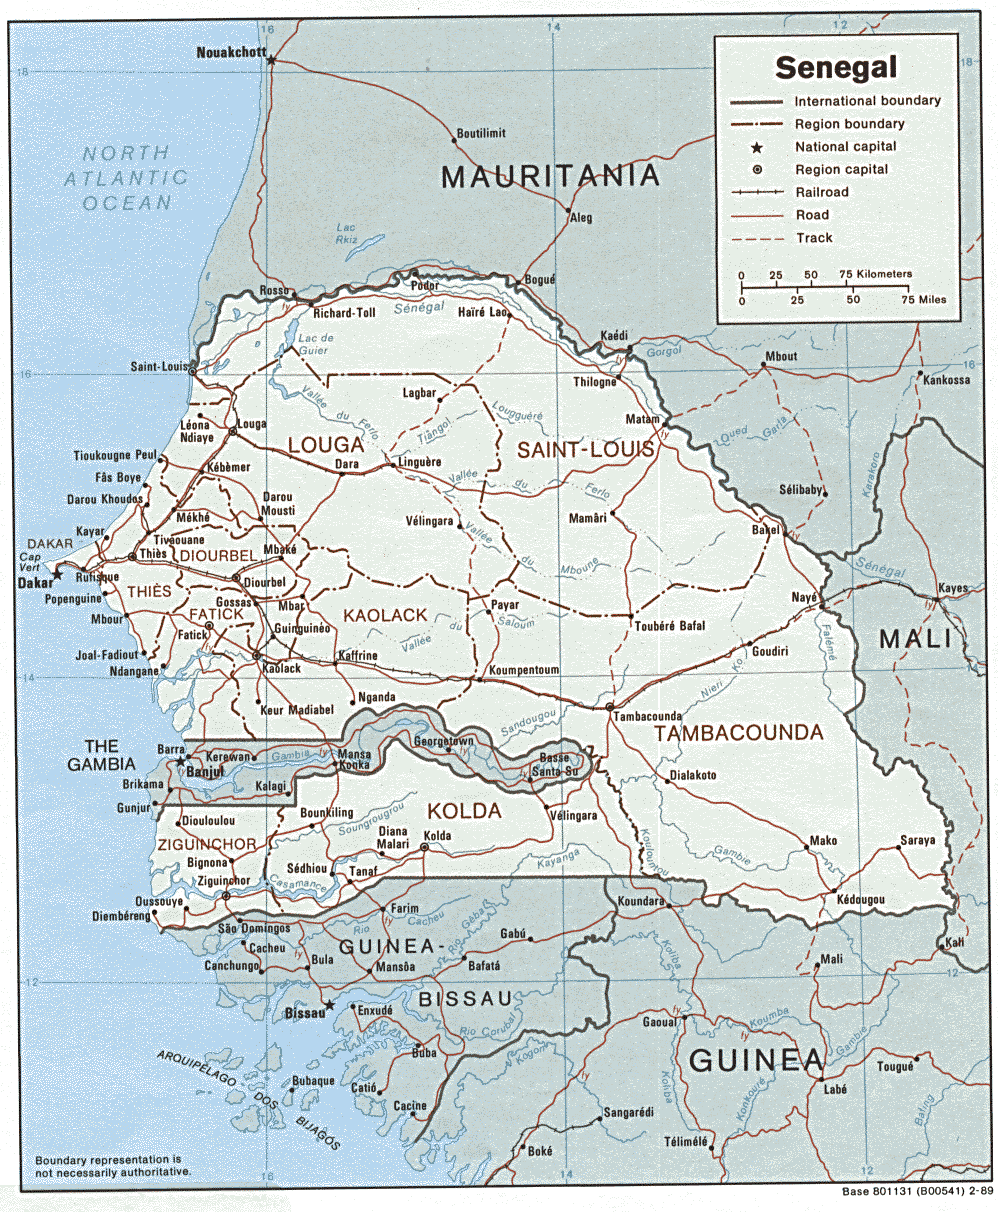 Detailed map of Senegal